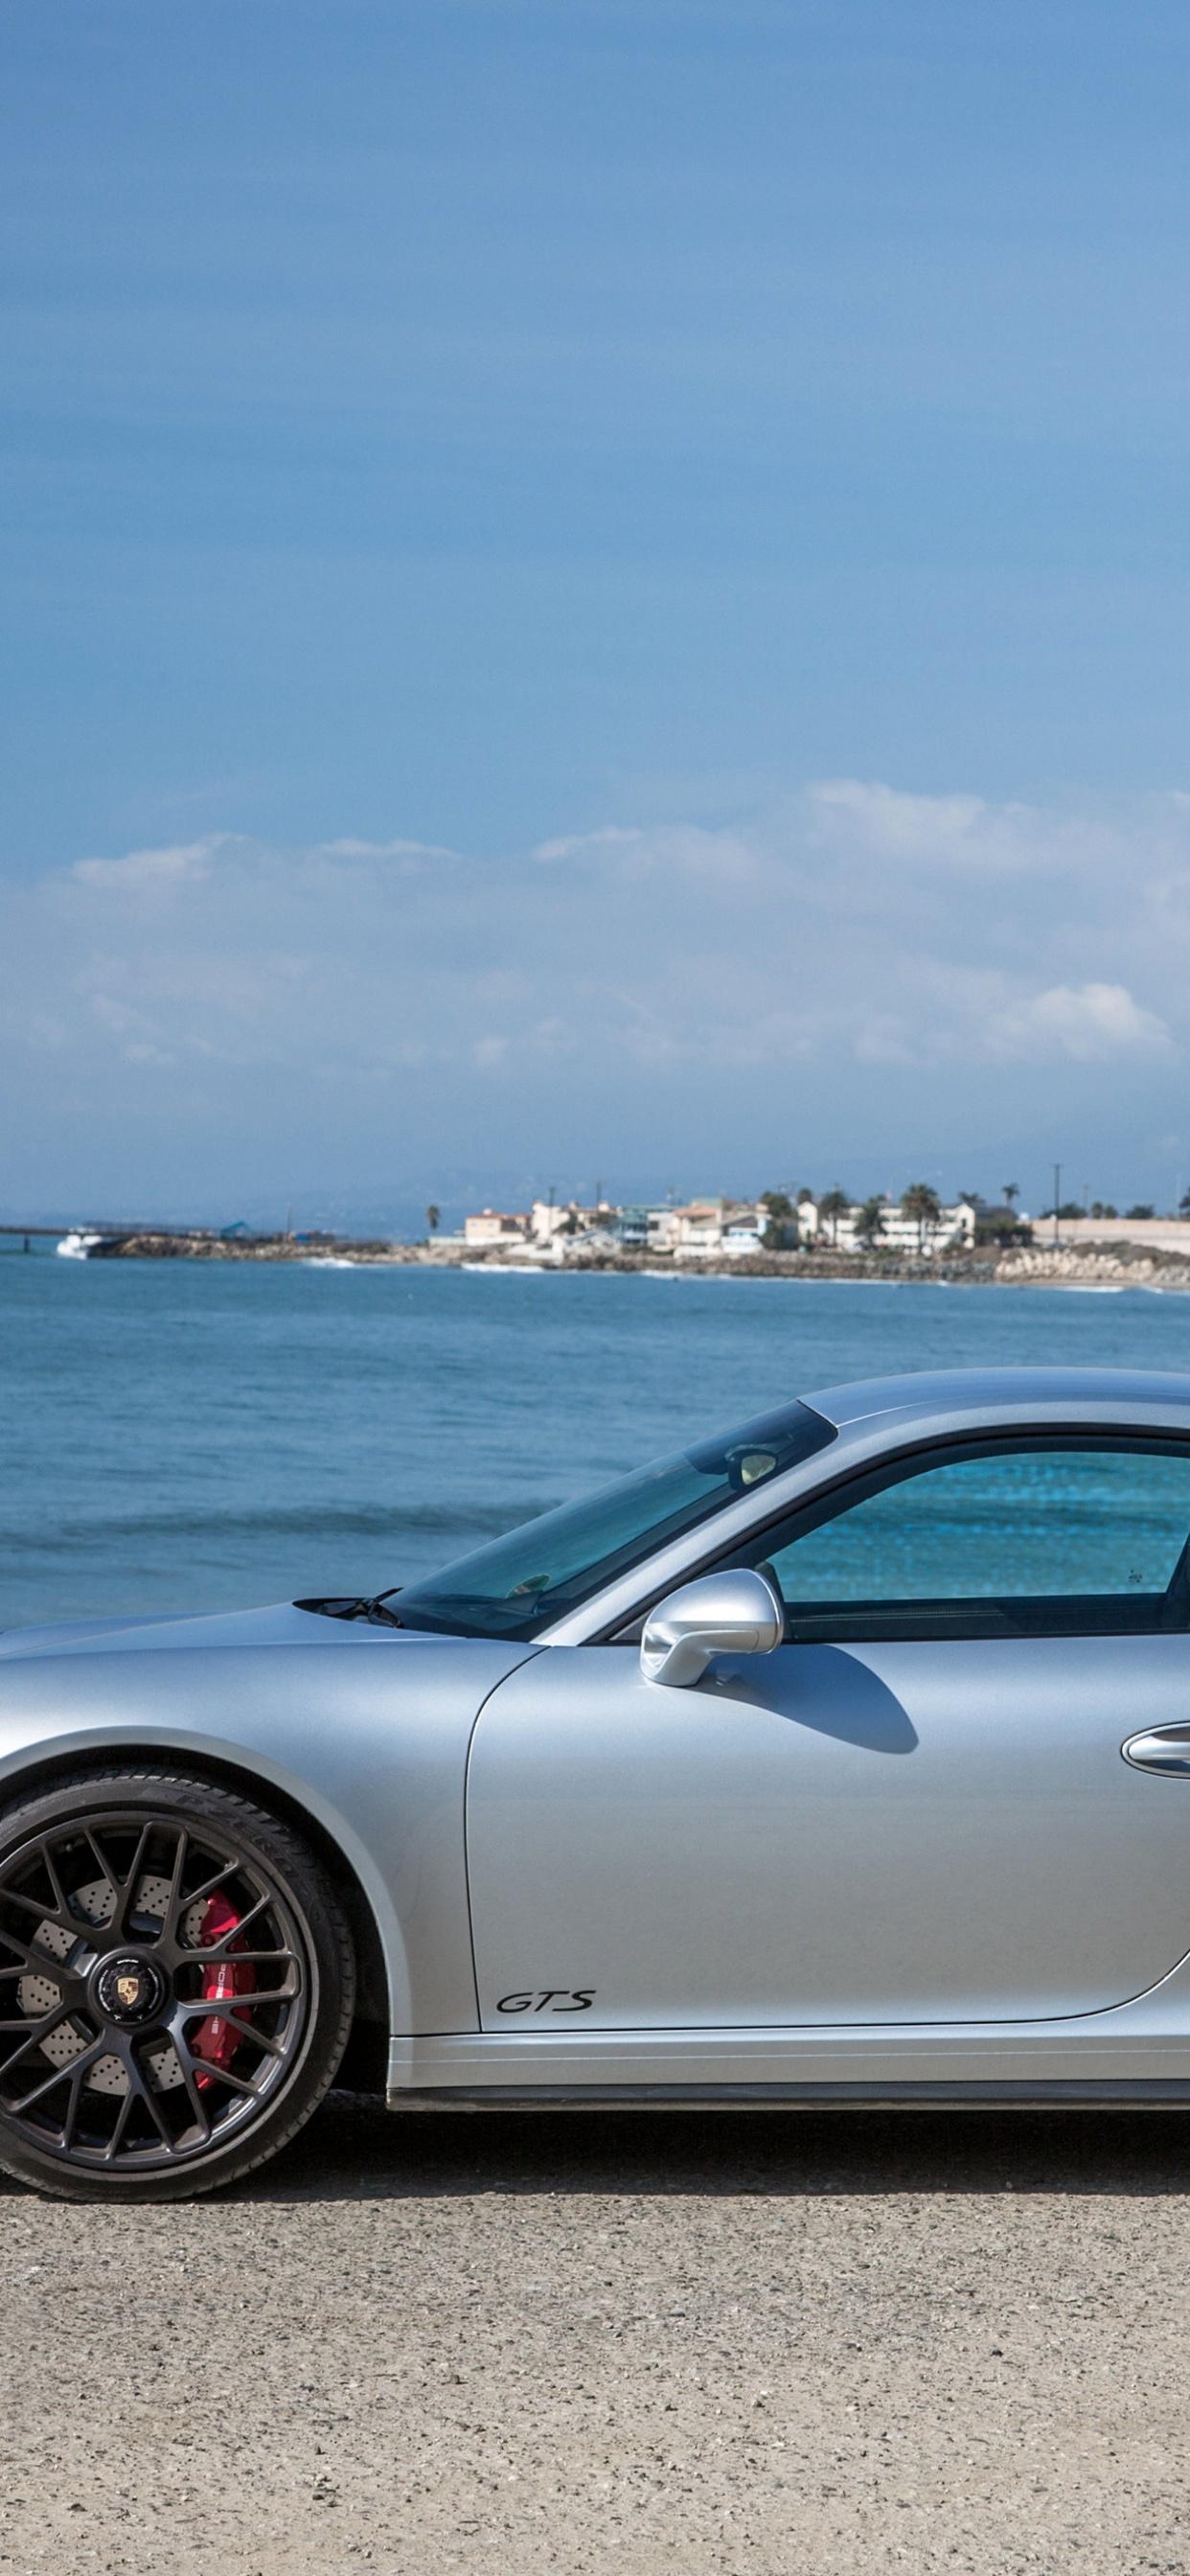 Silver Porsche 911 Parked on Seashore During Daytime. Wallpaper in 1242x2688 Resolution